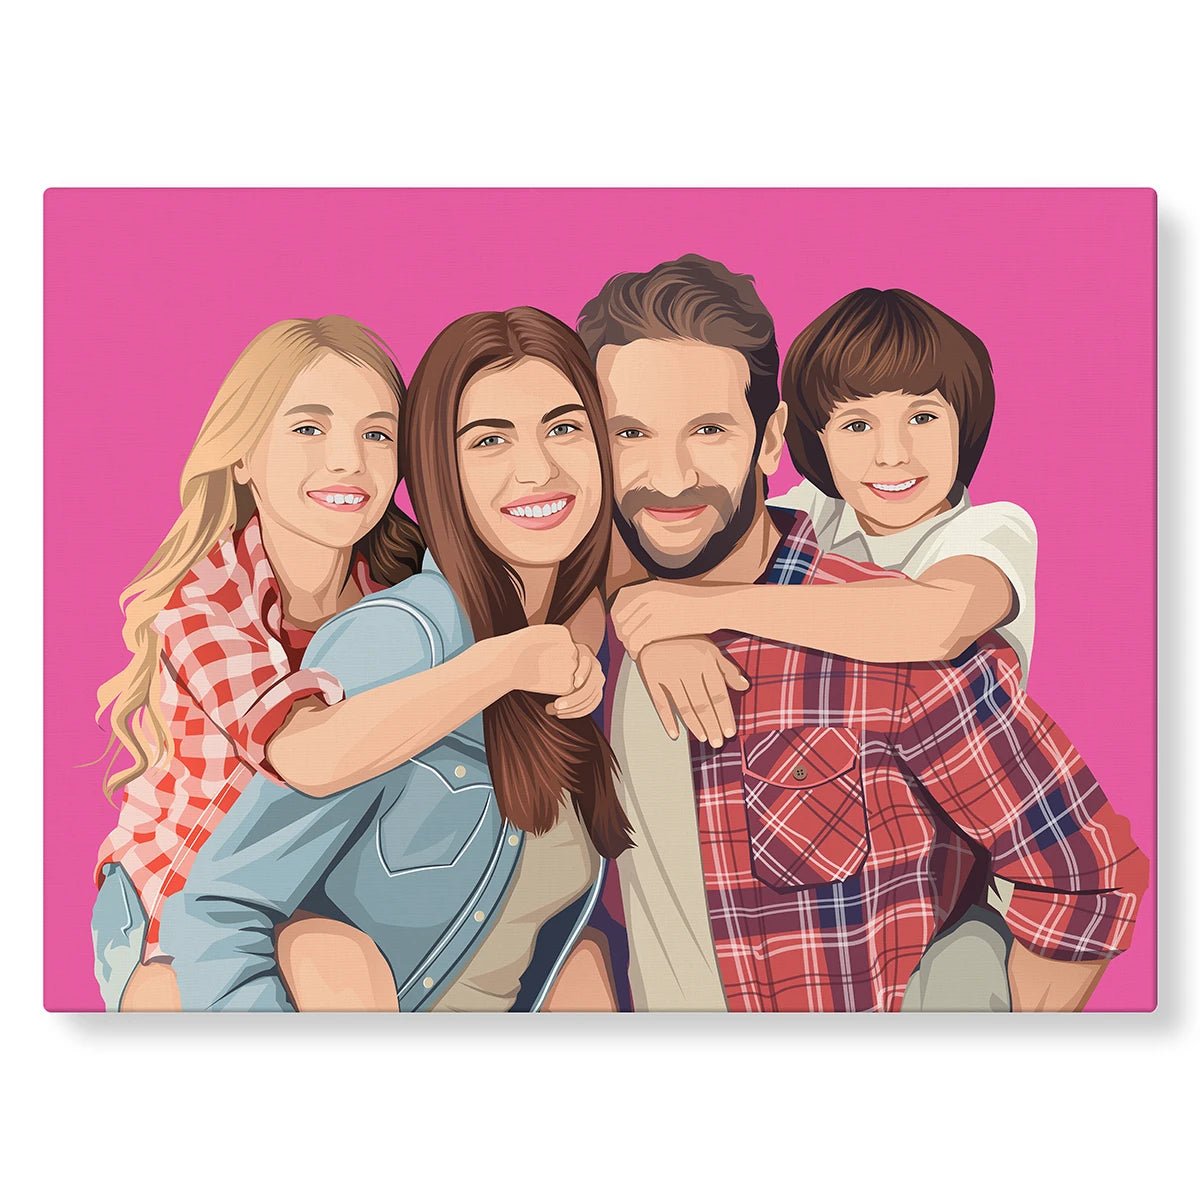 Tableau de famille illustré : PicsArt rose - Studio Pop Art